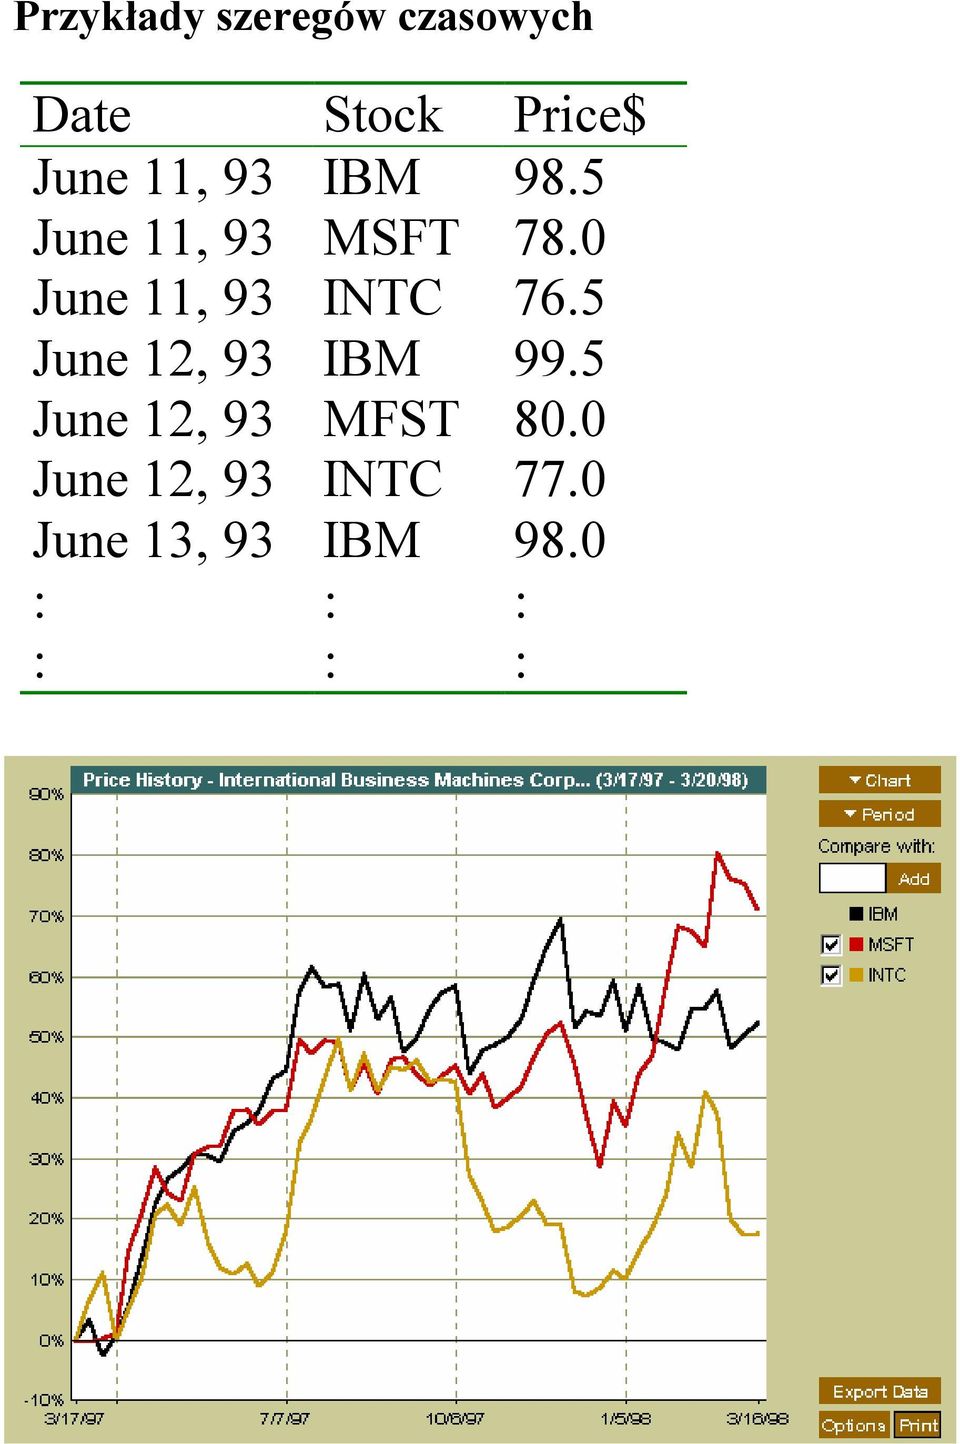 0 June 11, 93 INTC 76.5 June 12, 93 IBM 99.